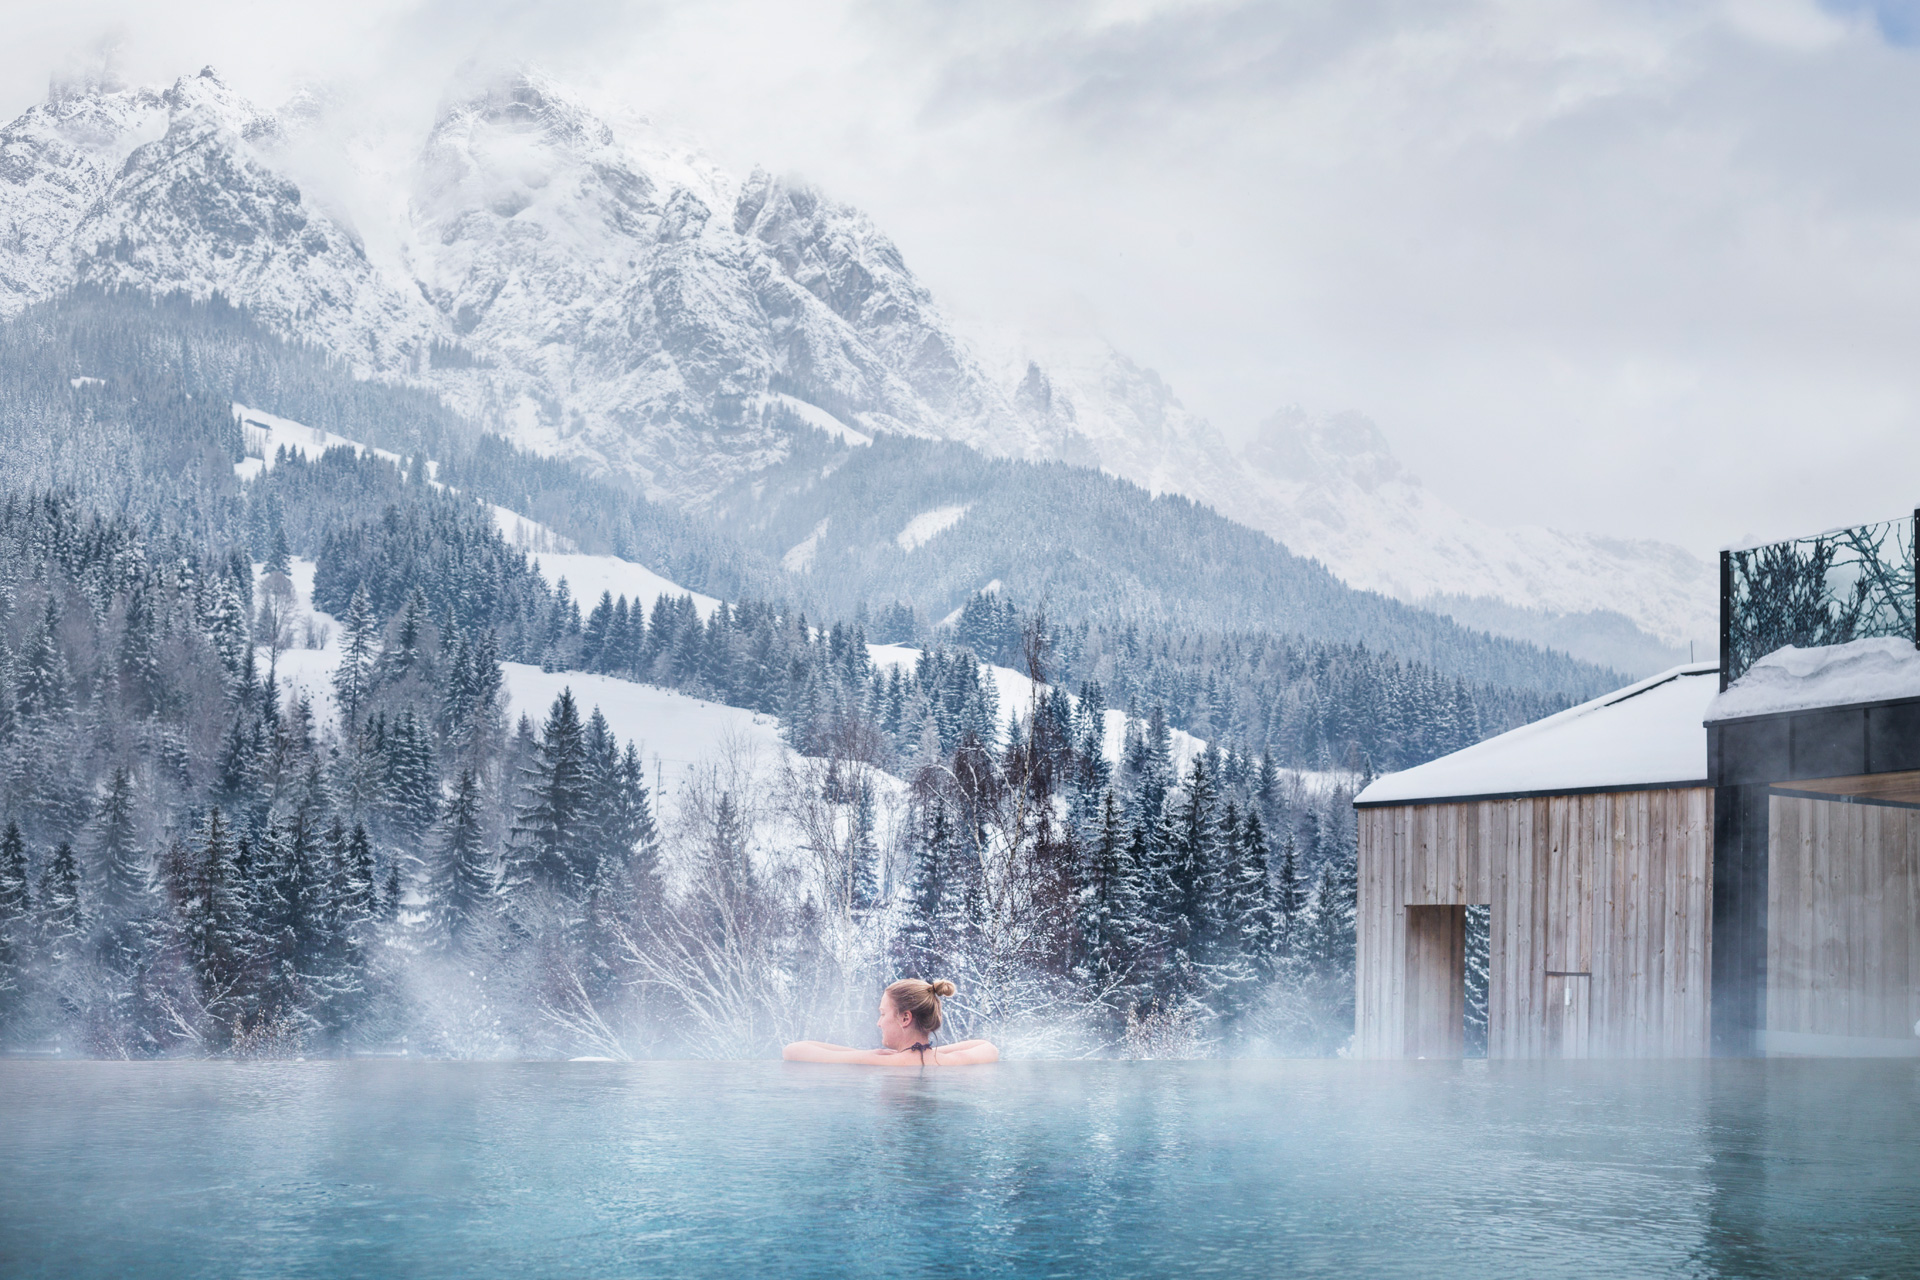 Heated alpine spa overlooking the mountains